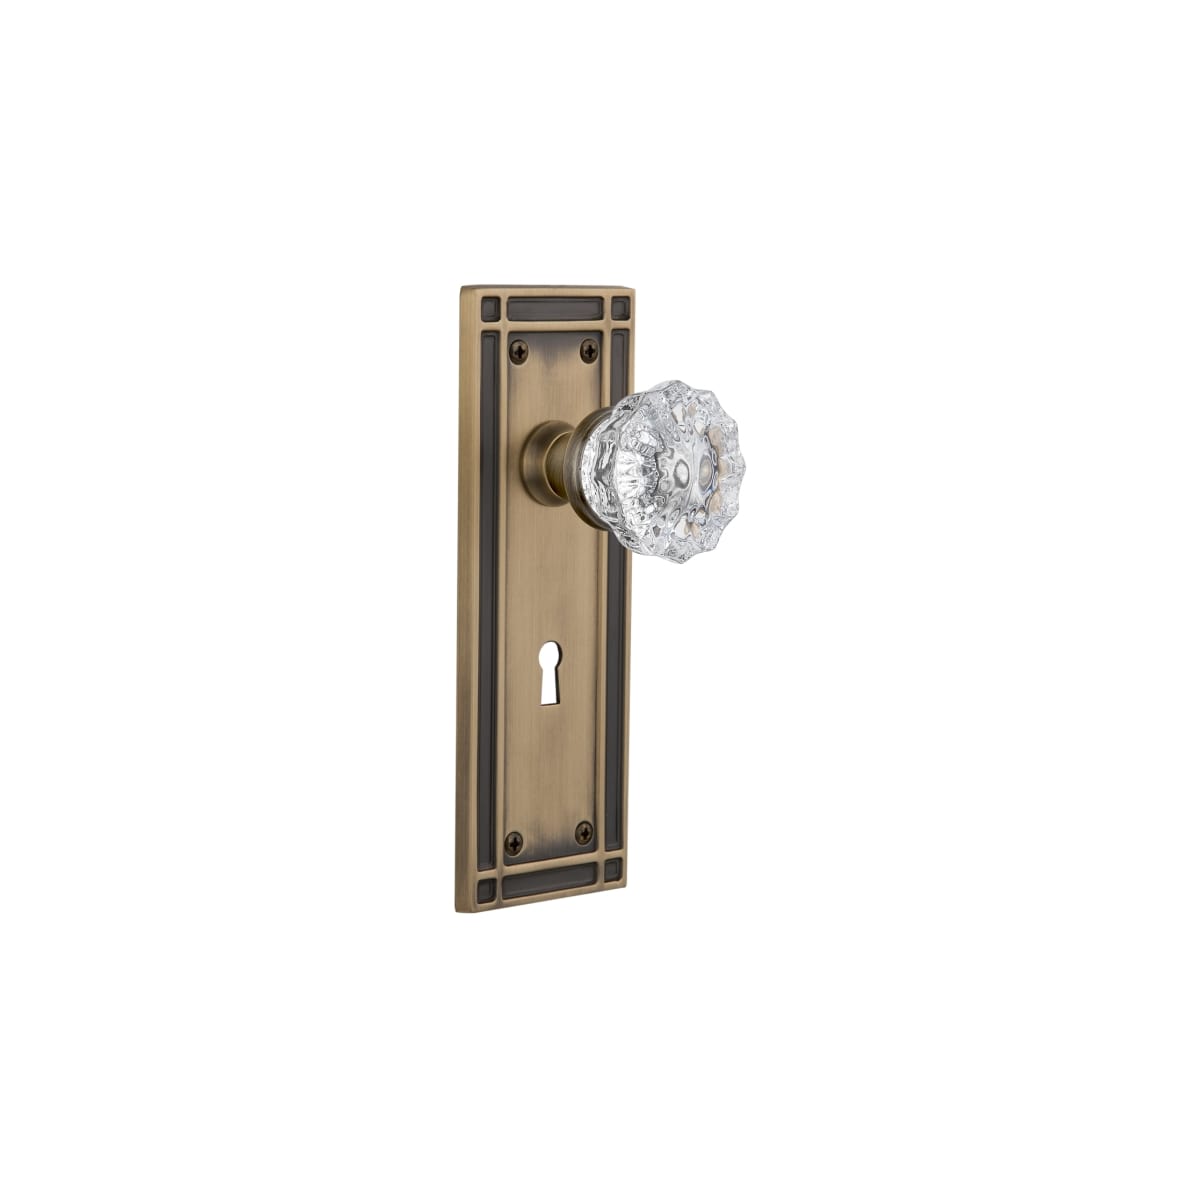 Nostalgic Warehouse 703398 Timeless Bronze Vintage Fluted Crystal Privacy Door  Knob Set with Solid Brass Mission Style Back Plate, Keyhole and 2-3/8"  Backset